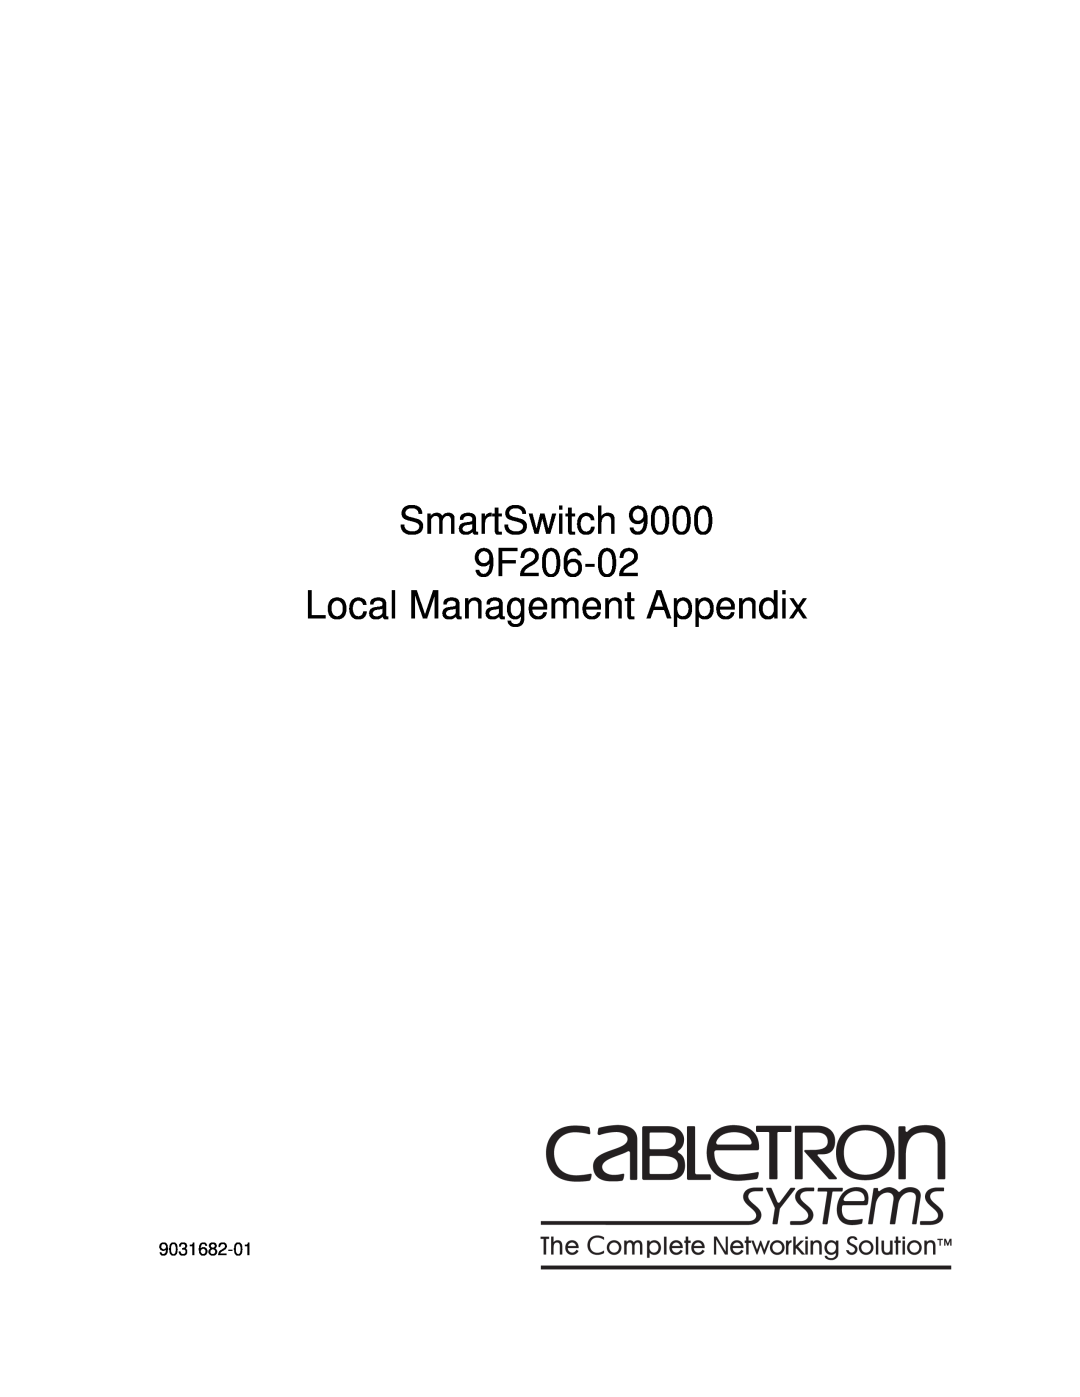 Cabletron Systems appendix SmartSwitch 9F206-02 Local Management Appendix, 9031682-01 